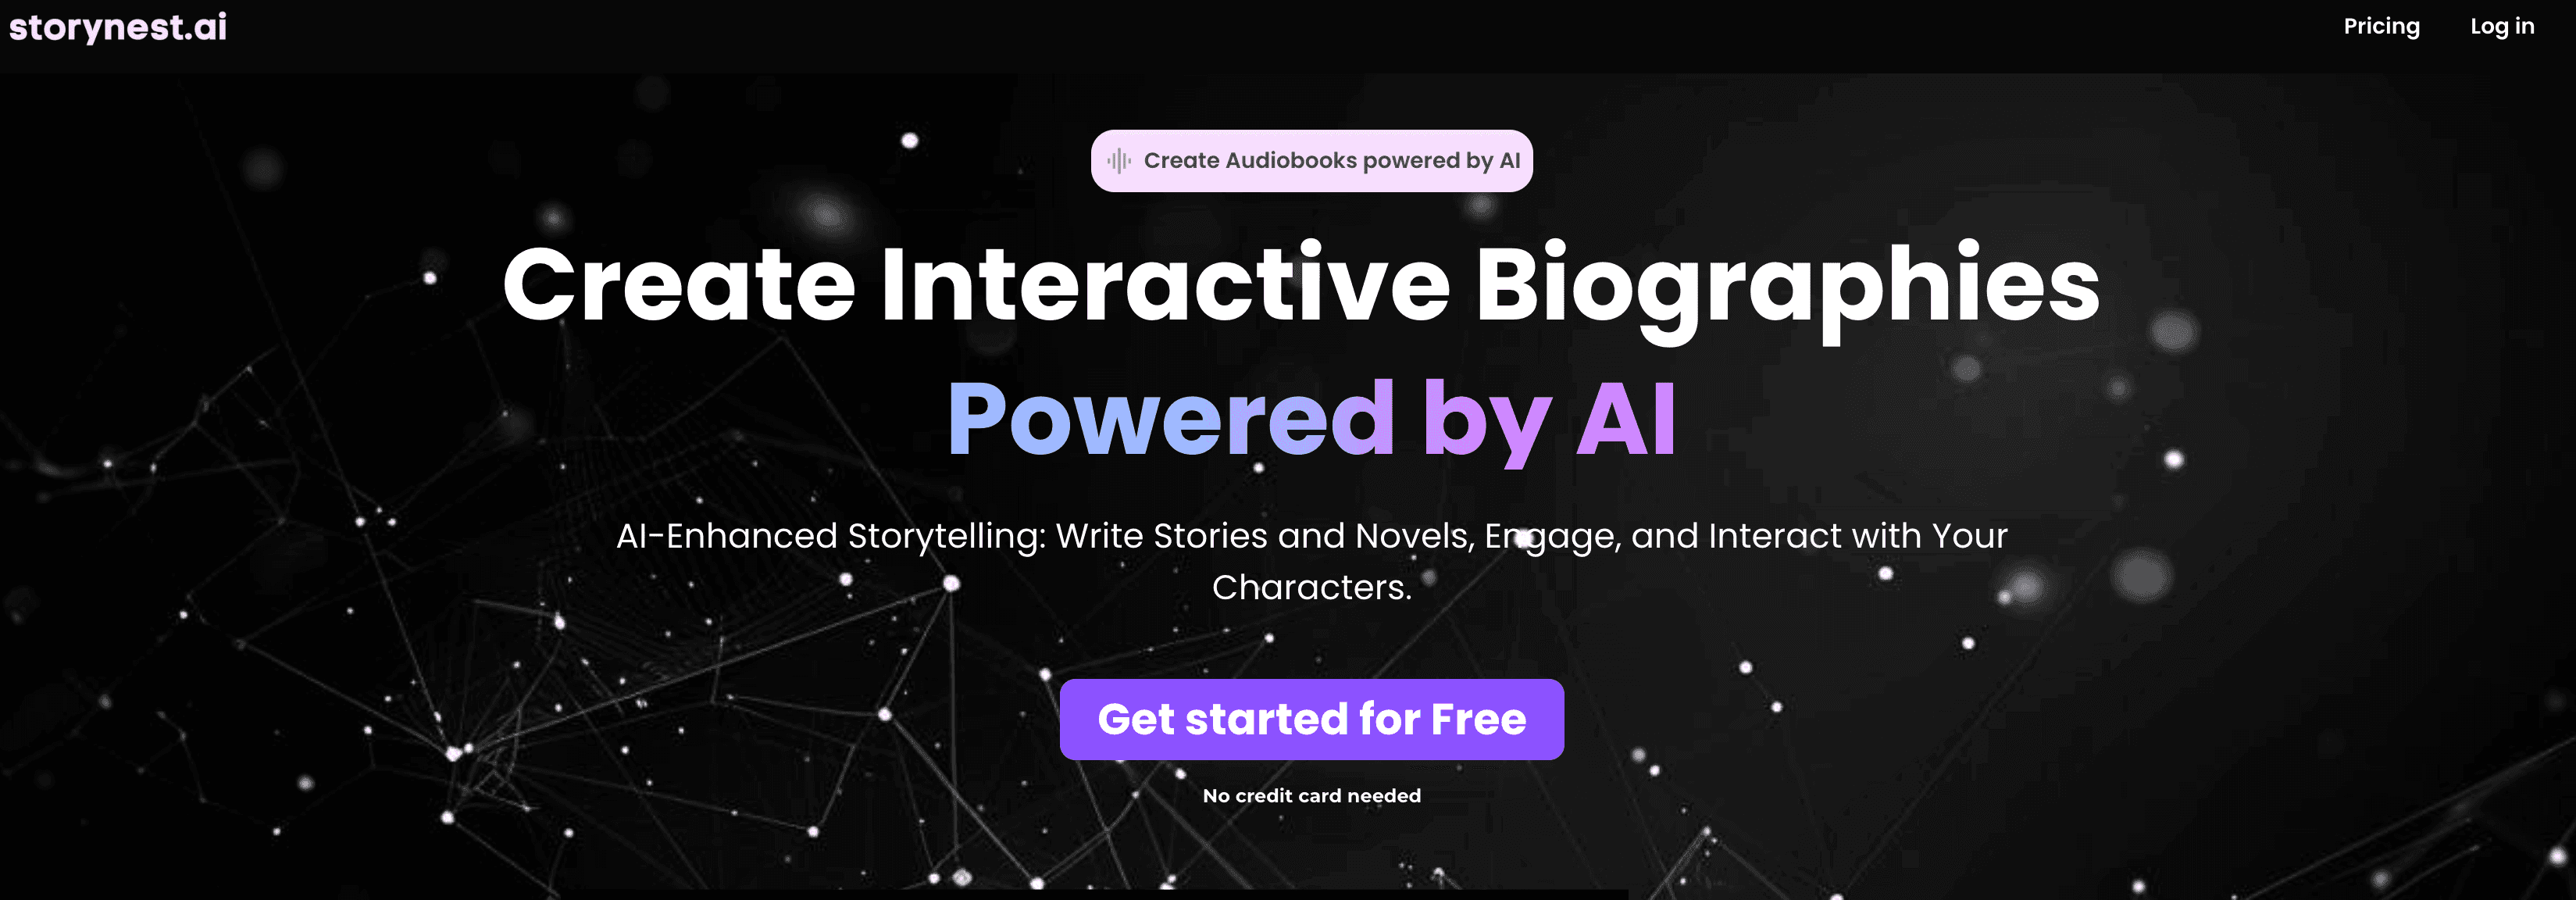 StoryNest AI